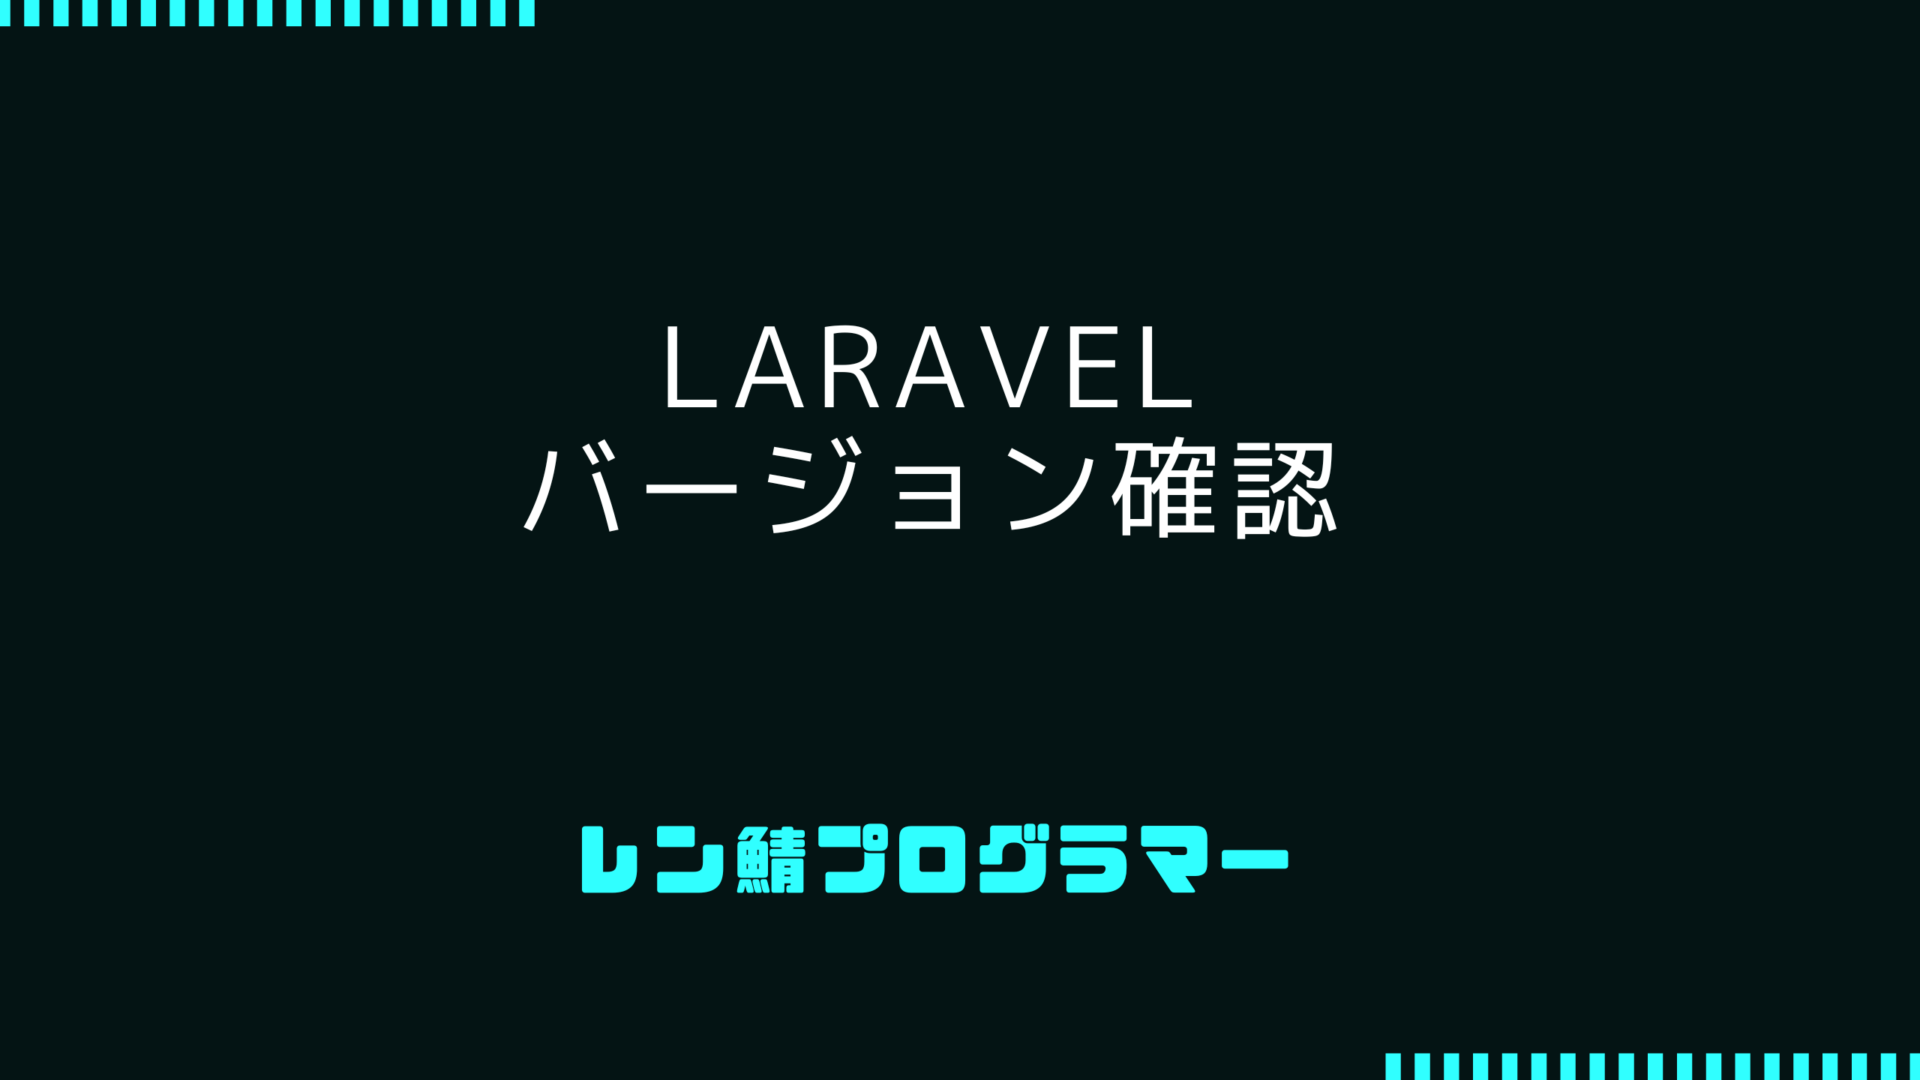 Laravelのバージョン確認を初心者向けに解説